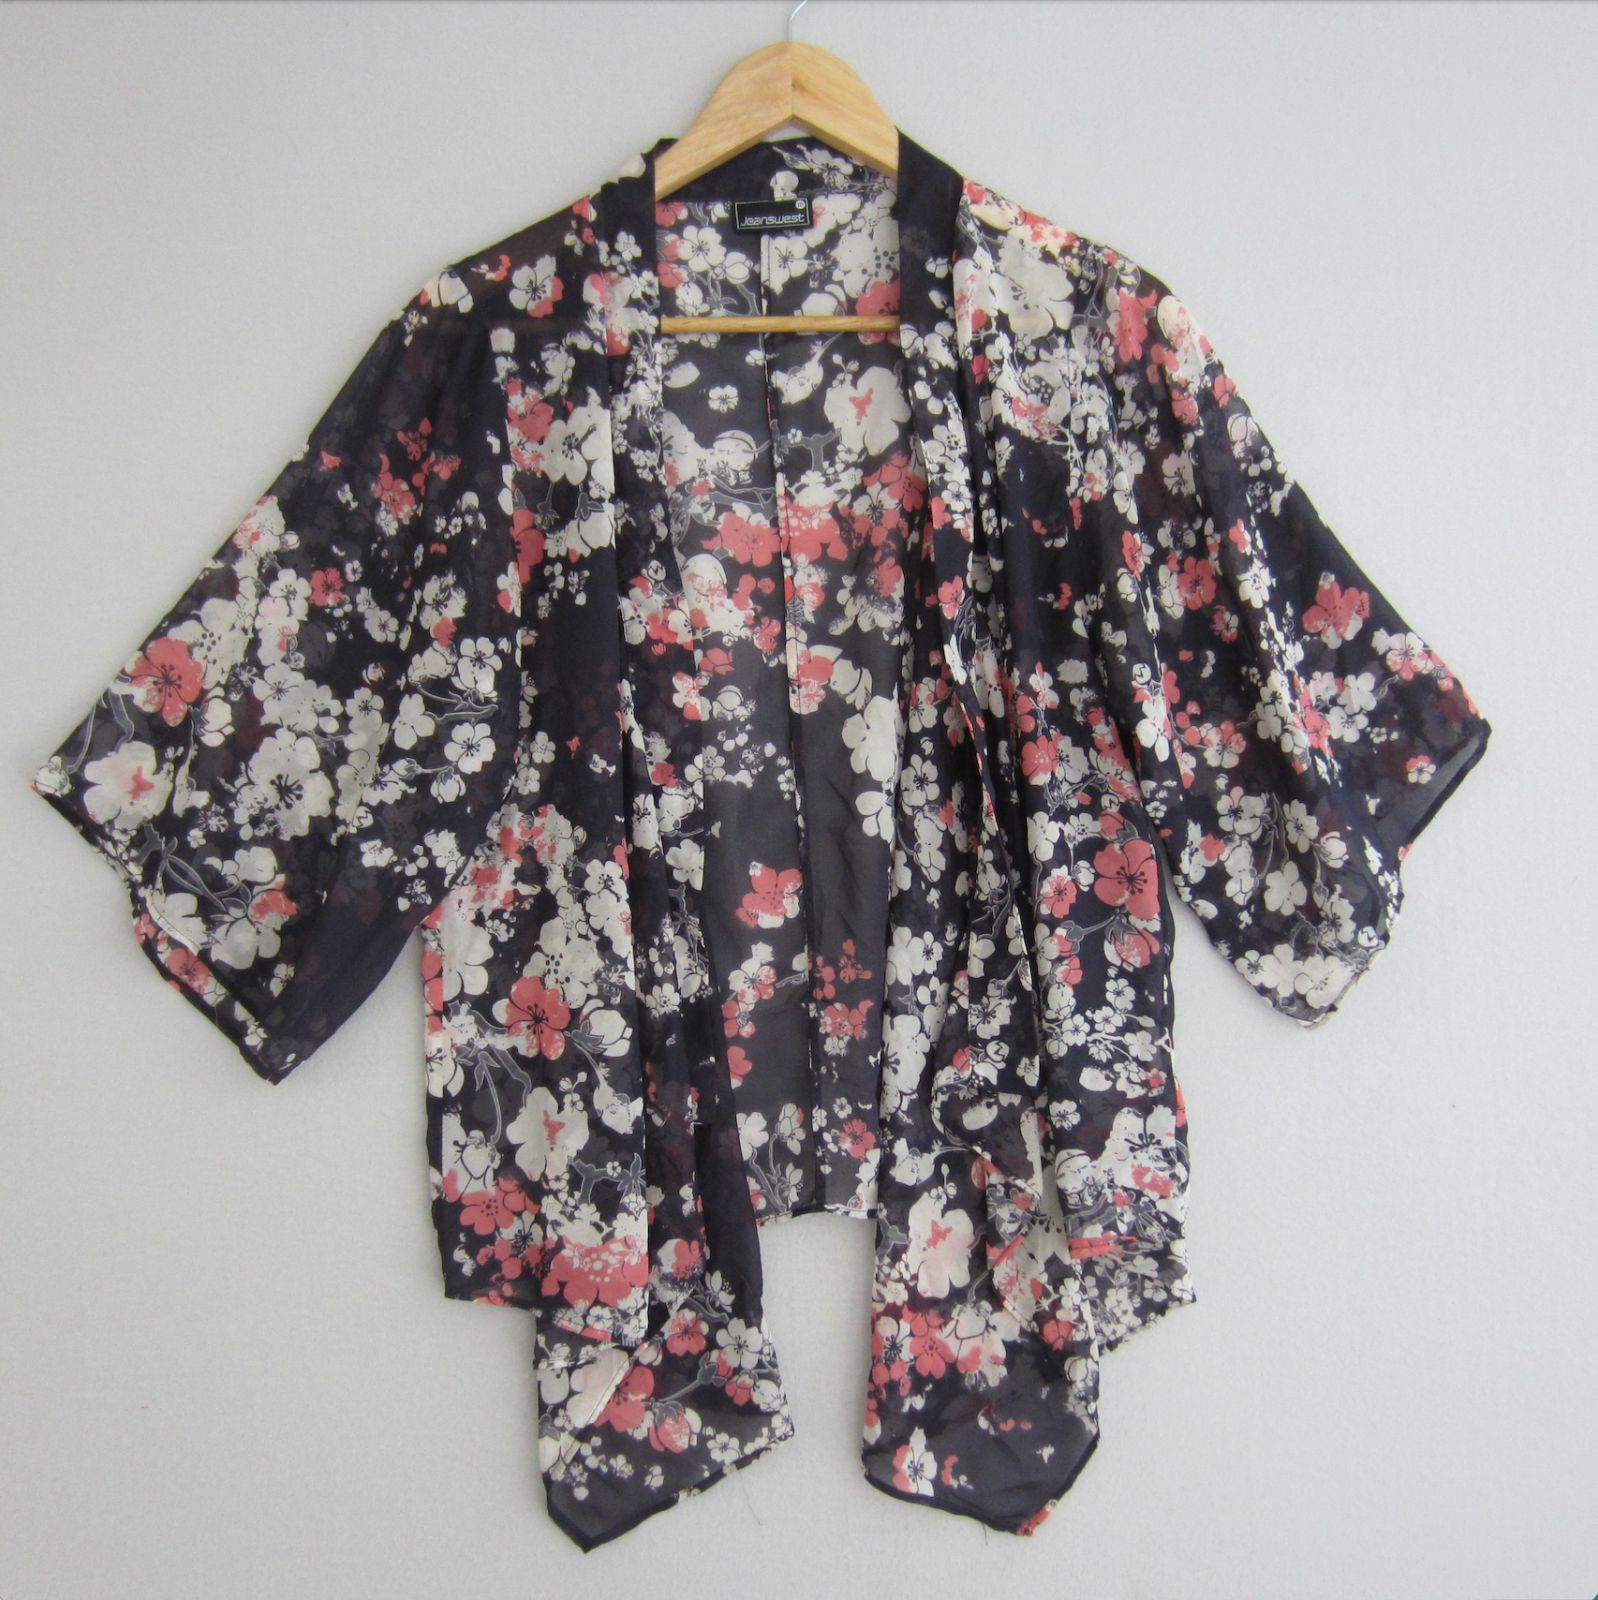 Jeanswest Top Womens Size 10 Pink Black White Floral Kimono Jacket Sheer Boho | eBay AU